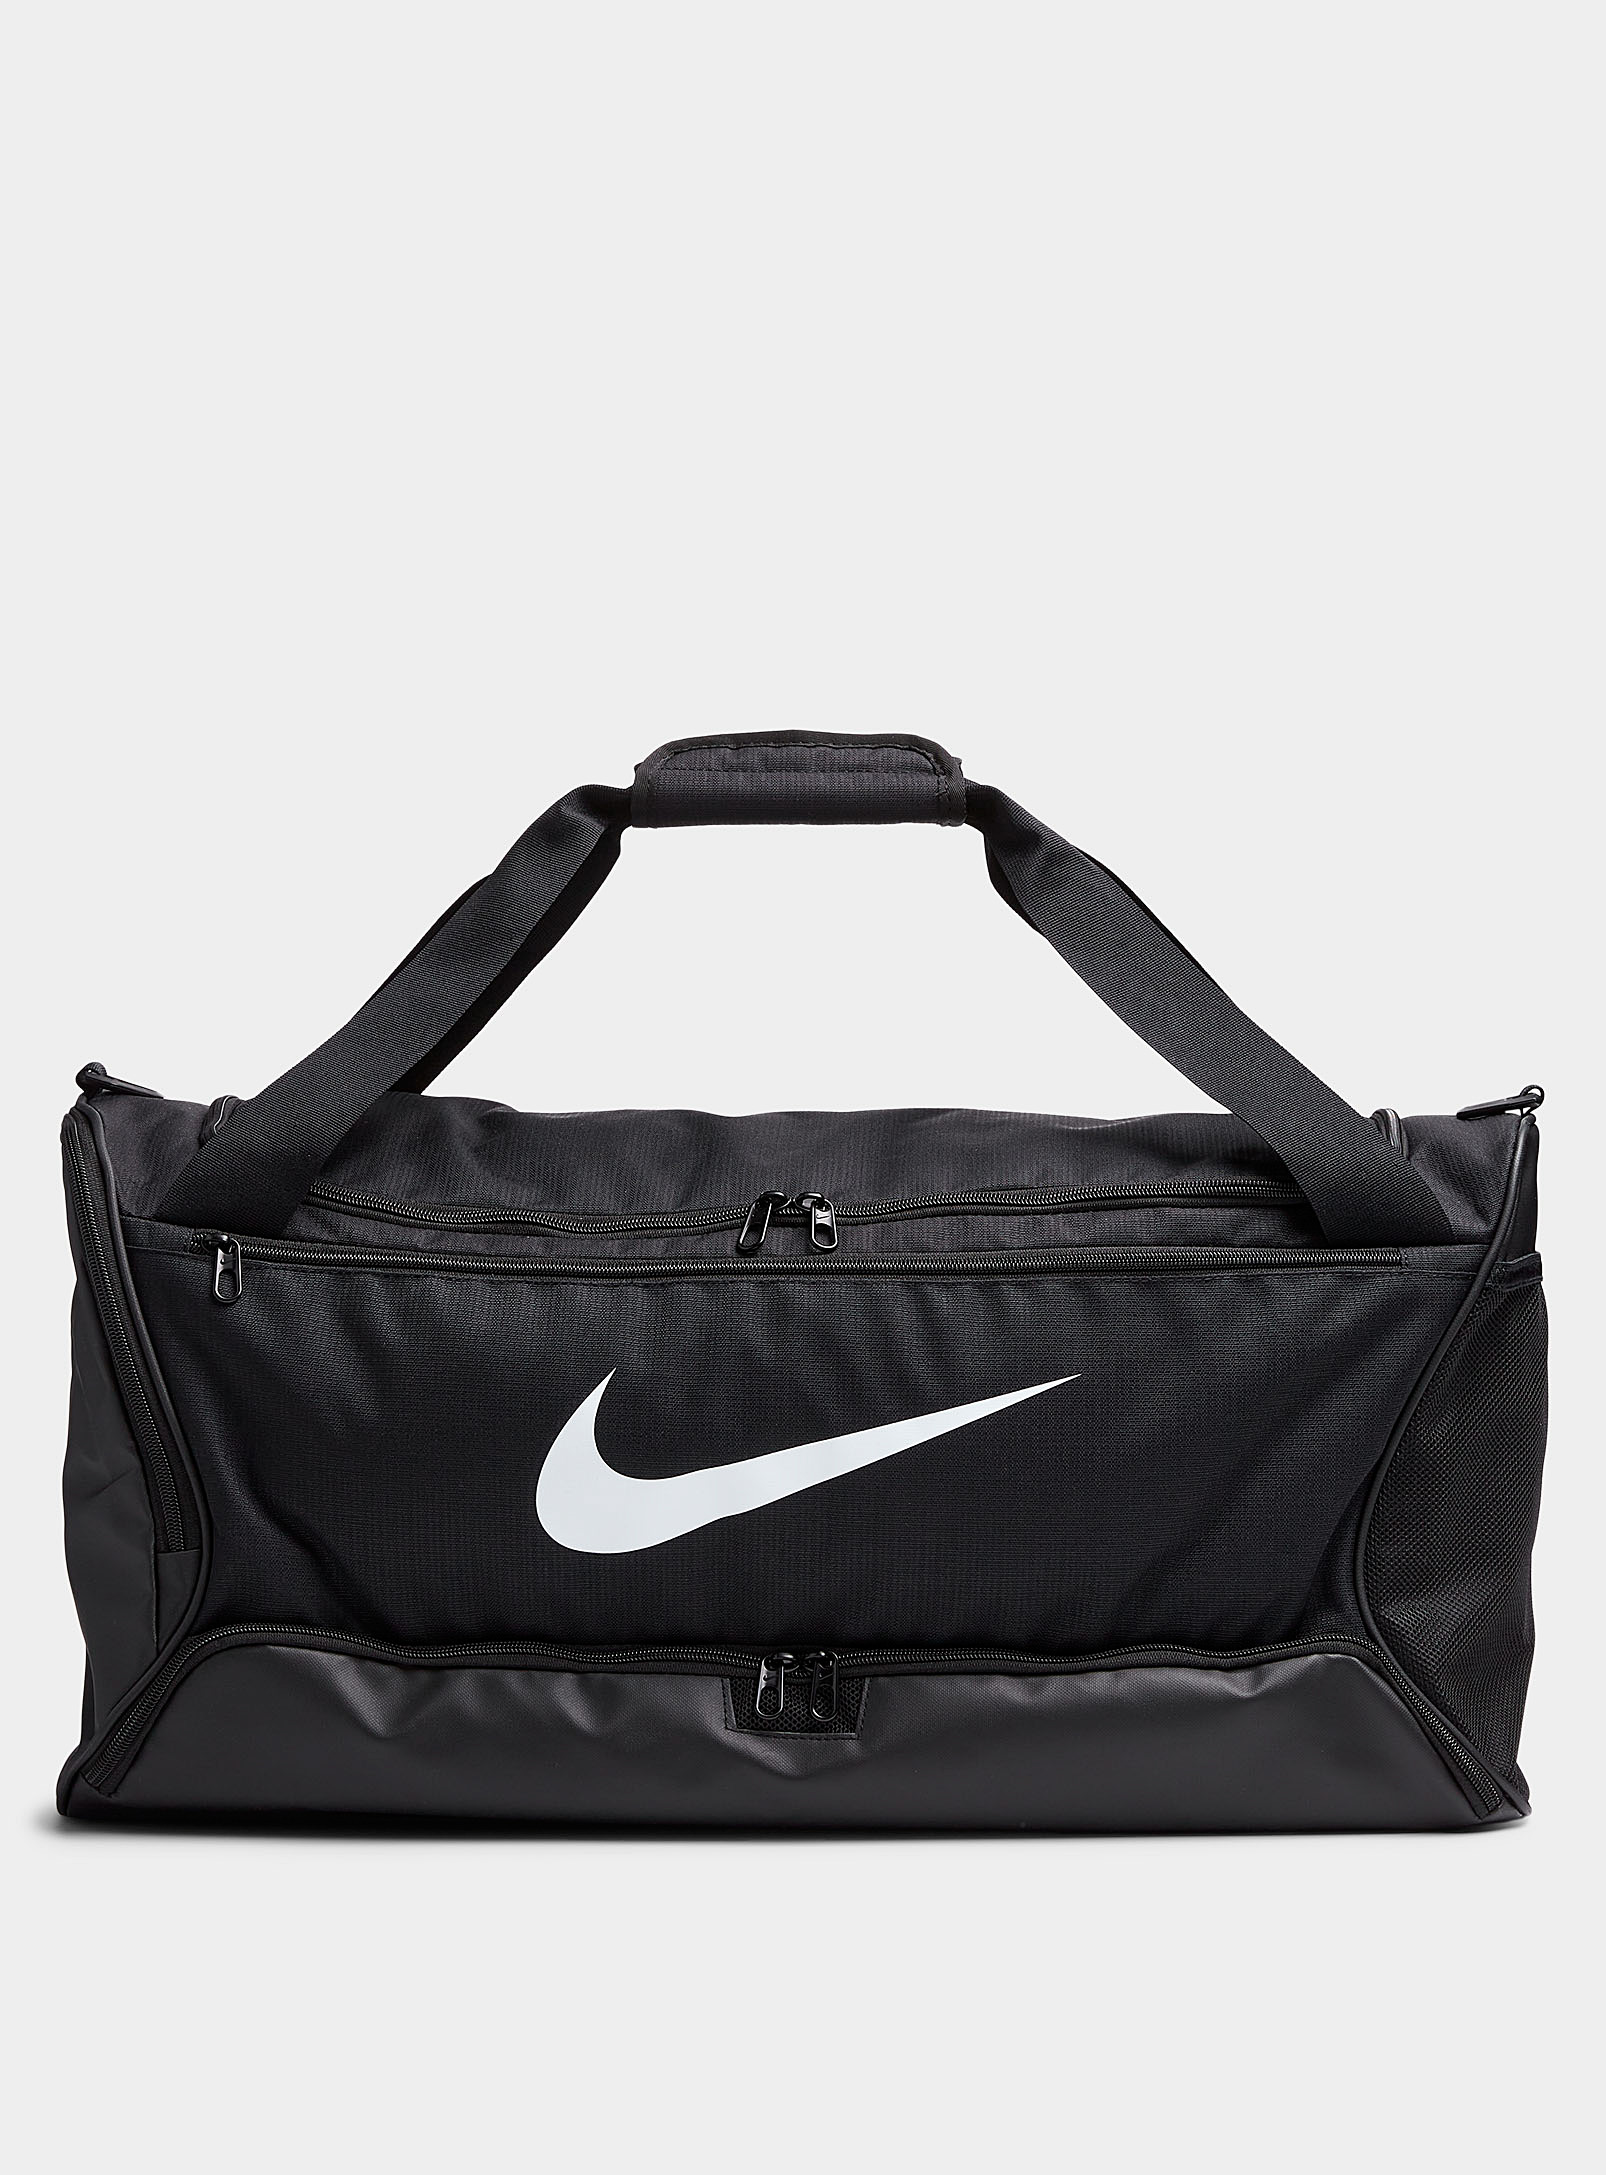 Nike Brasilia Duffle Bag In Black